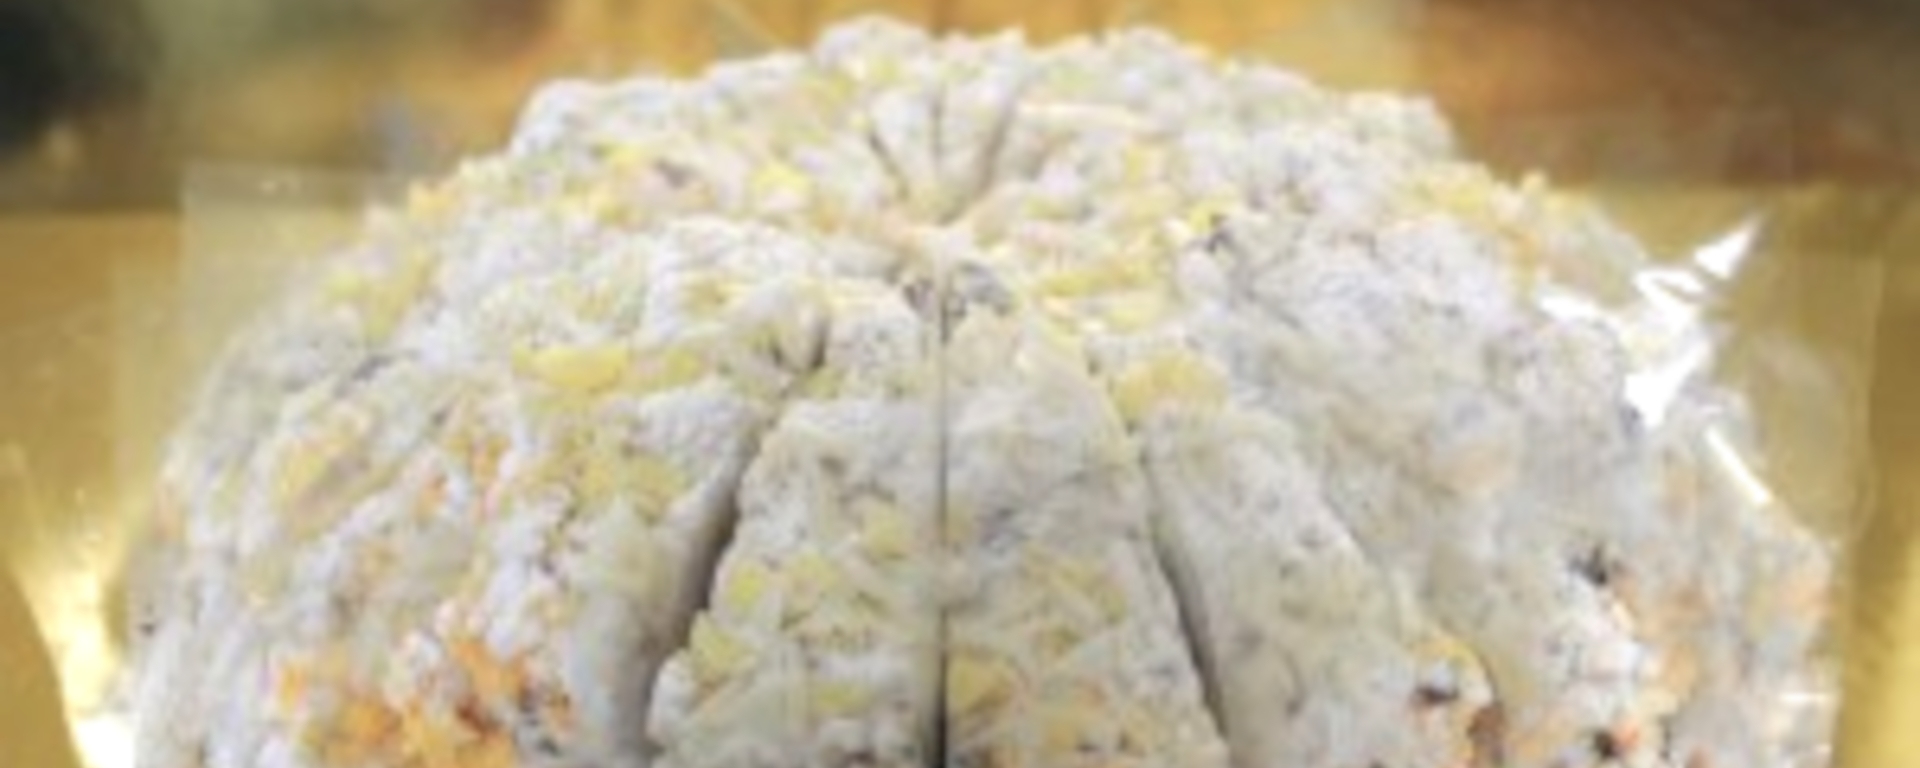 LuvMyRecipe.com - Italian Soft Nougat Cake Featured